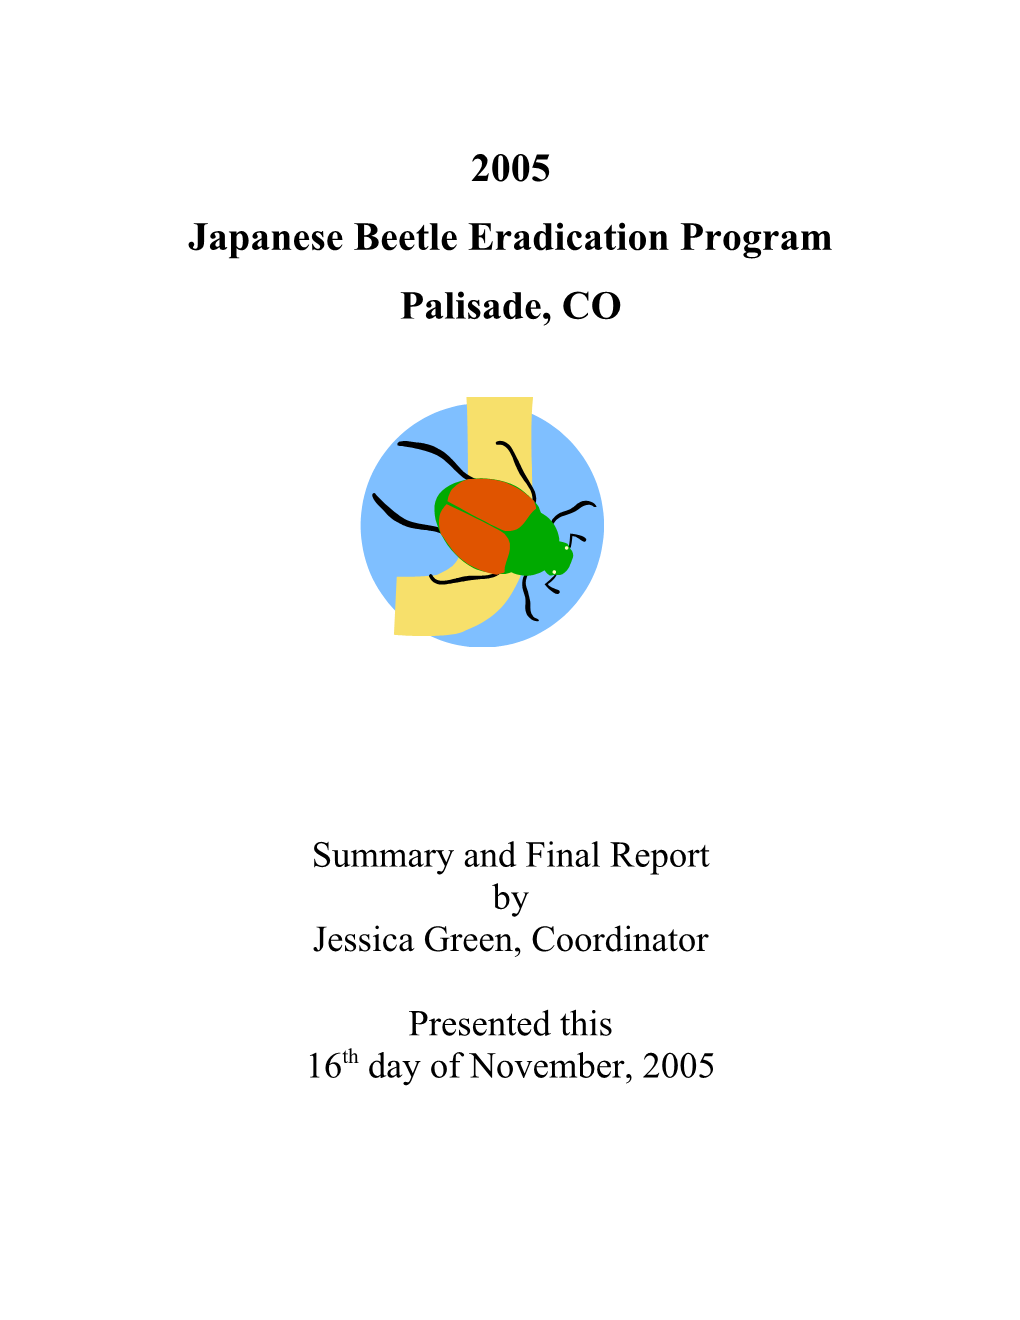 Japanese Beetle Eradication Program